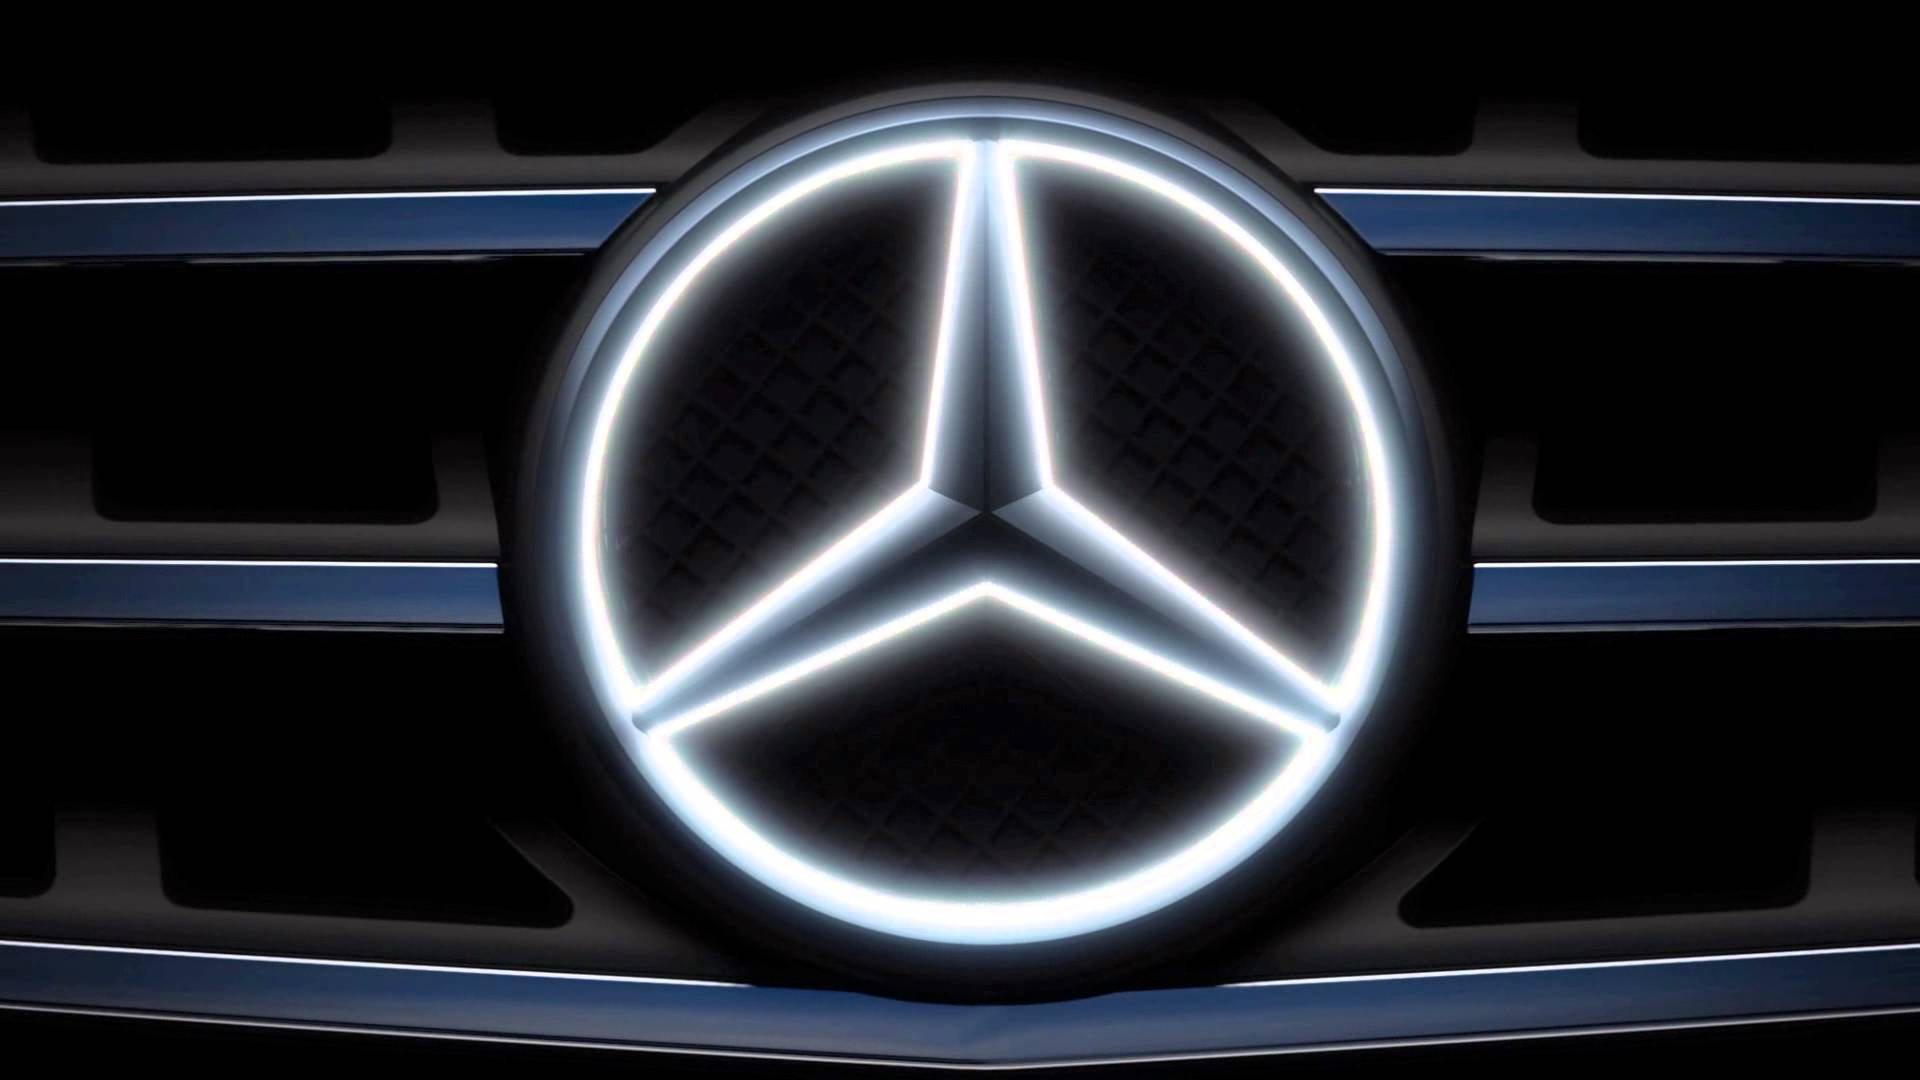 Mercedes Benz Wallpapers Hd Download